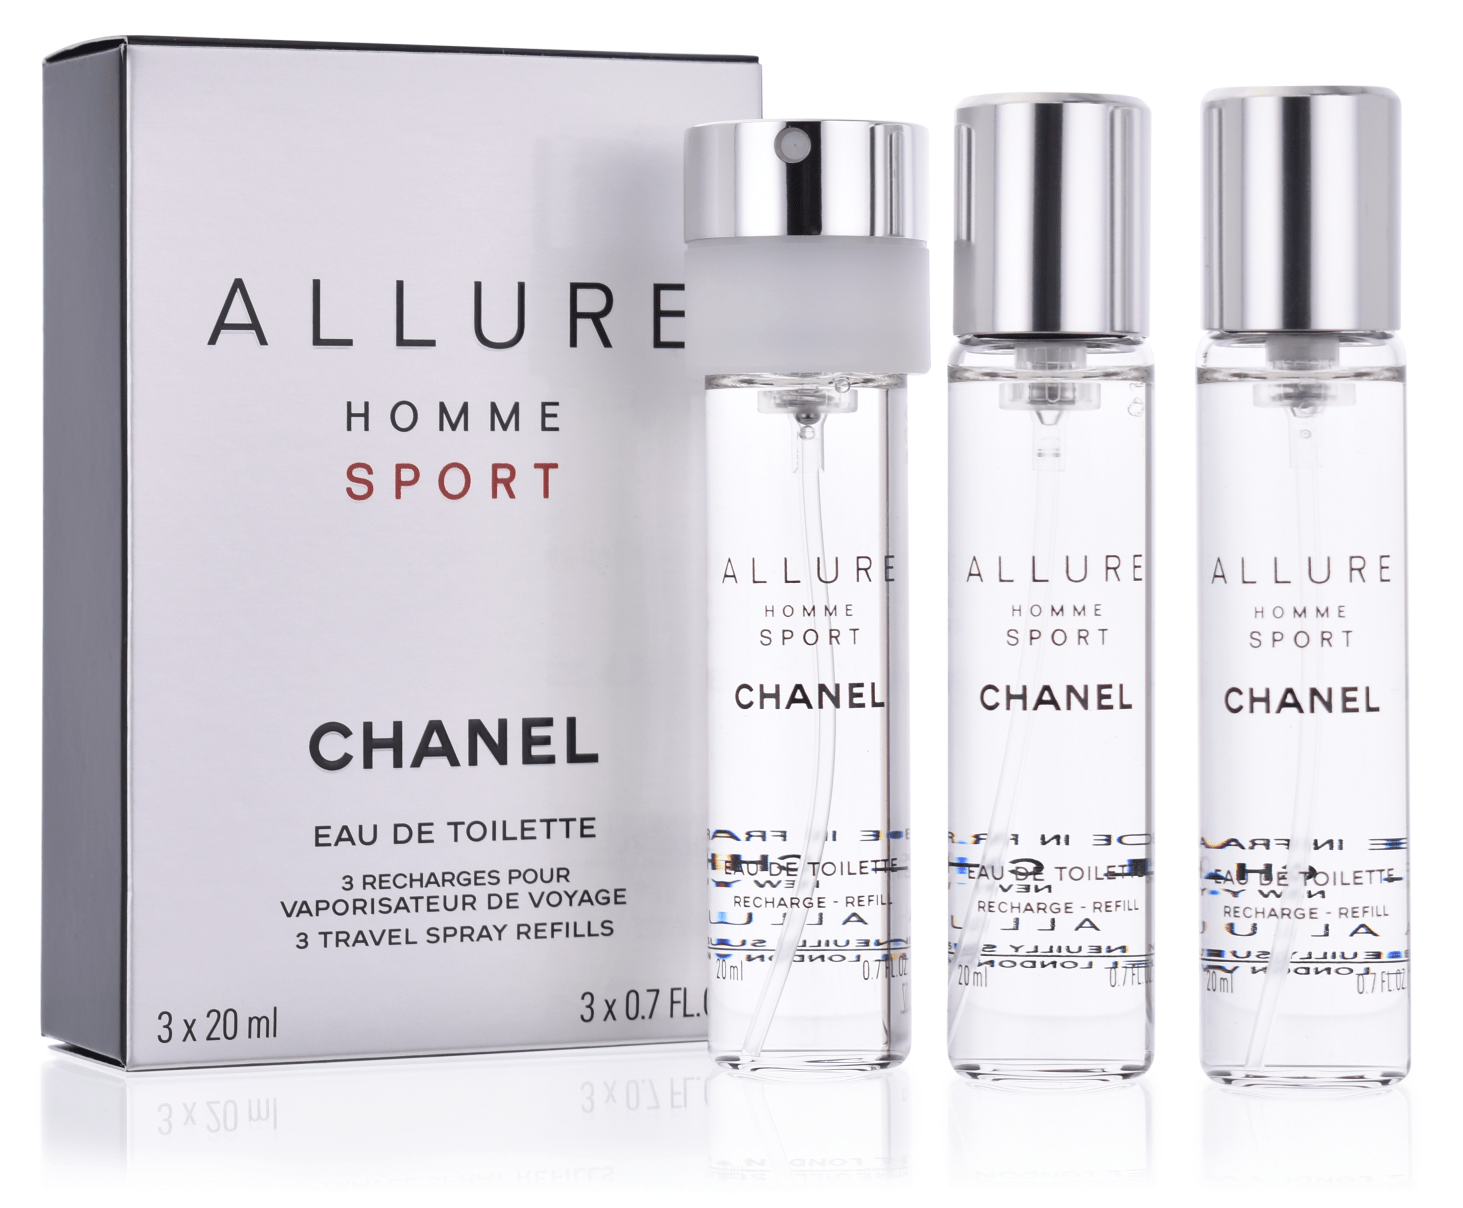 Chanel Allure Homme Sport 3 x 20 ml Eau de Toilette Nachfüllung